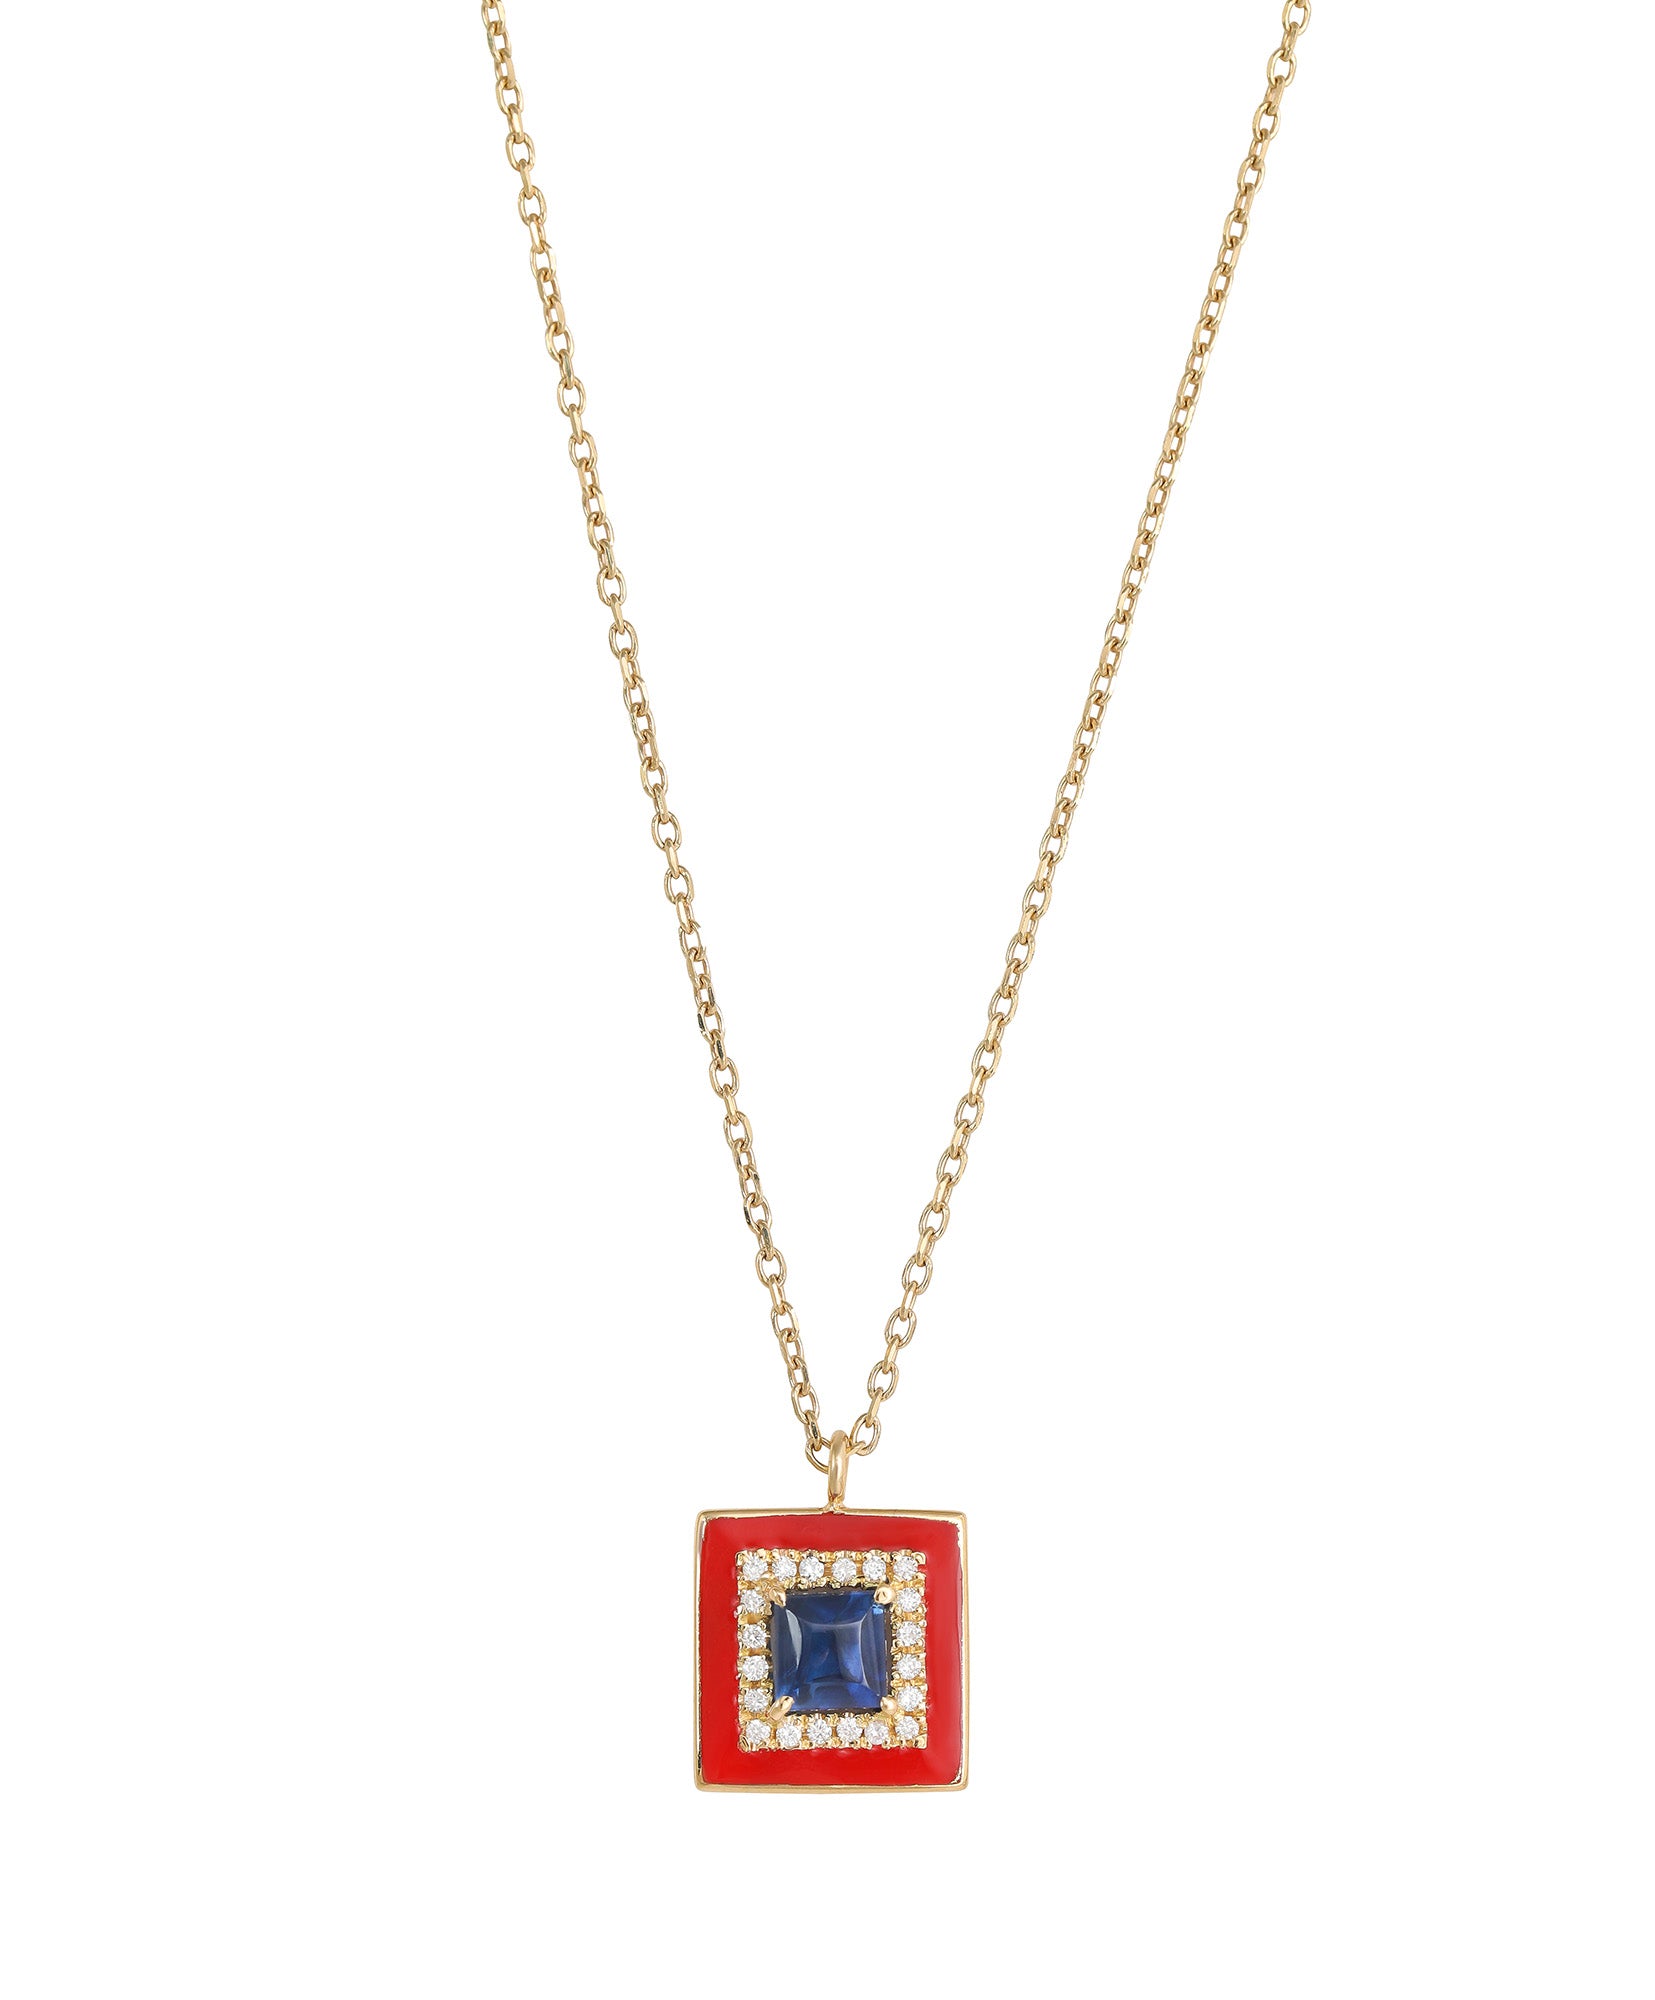 J by Boghossian, necklace, white diamond, gold, sapphire, red enamel